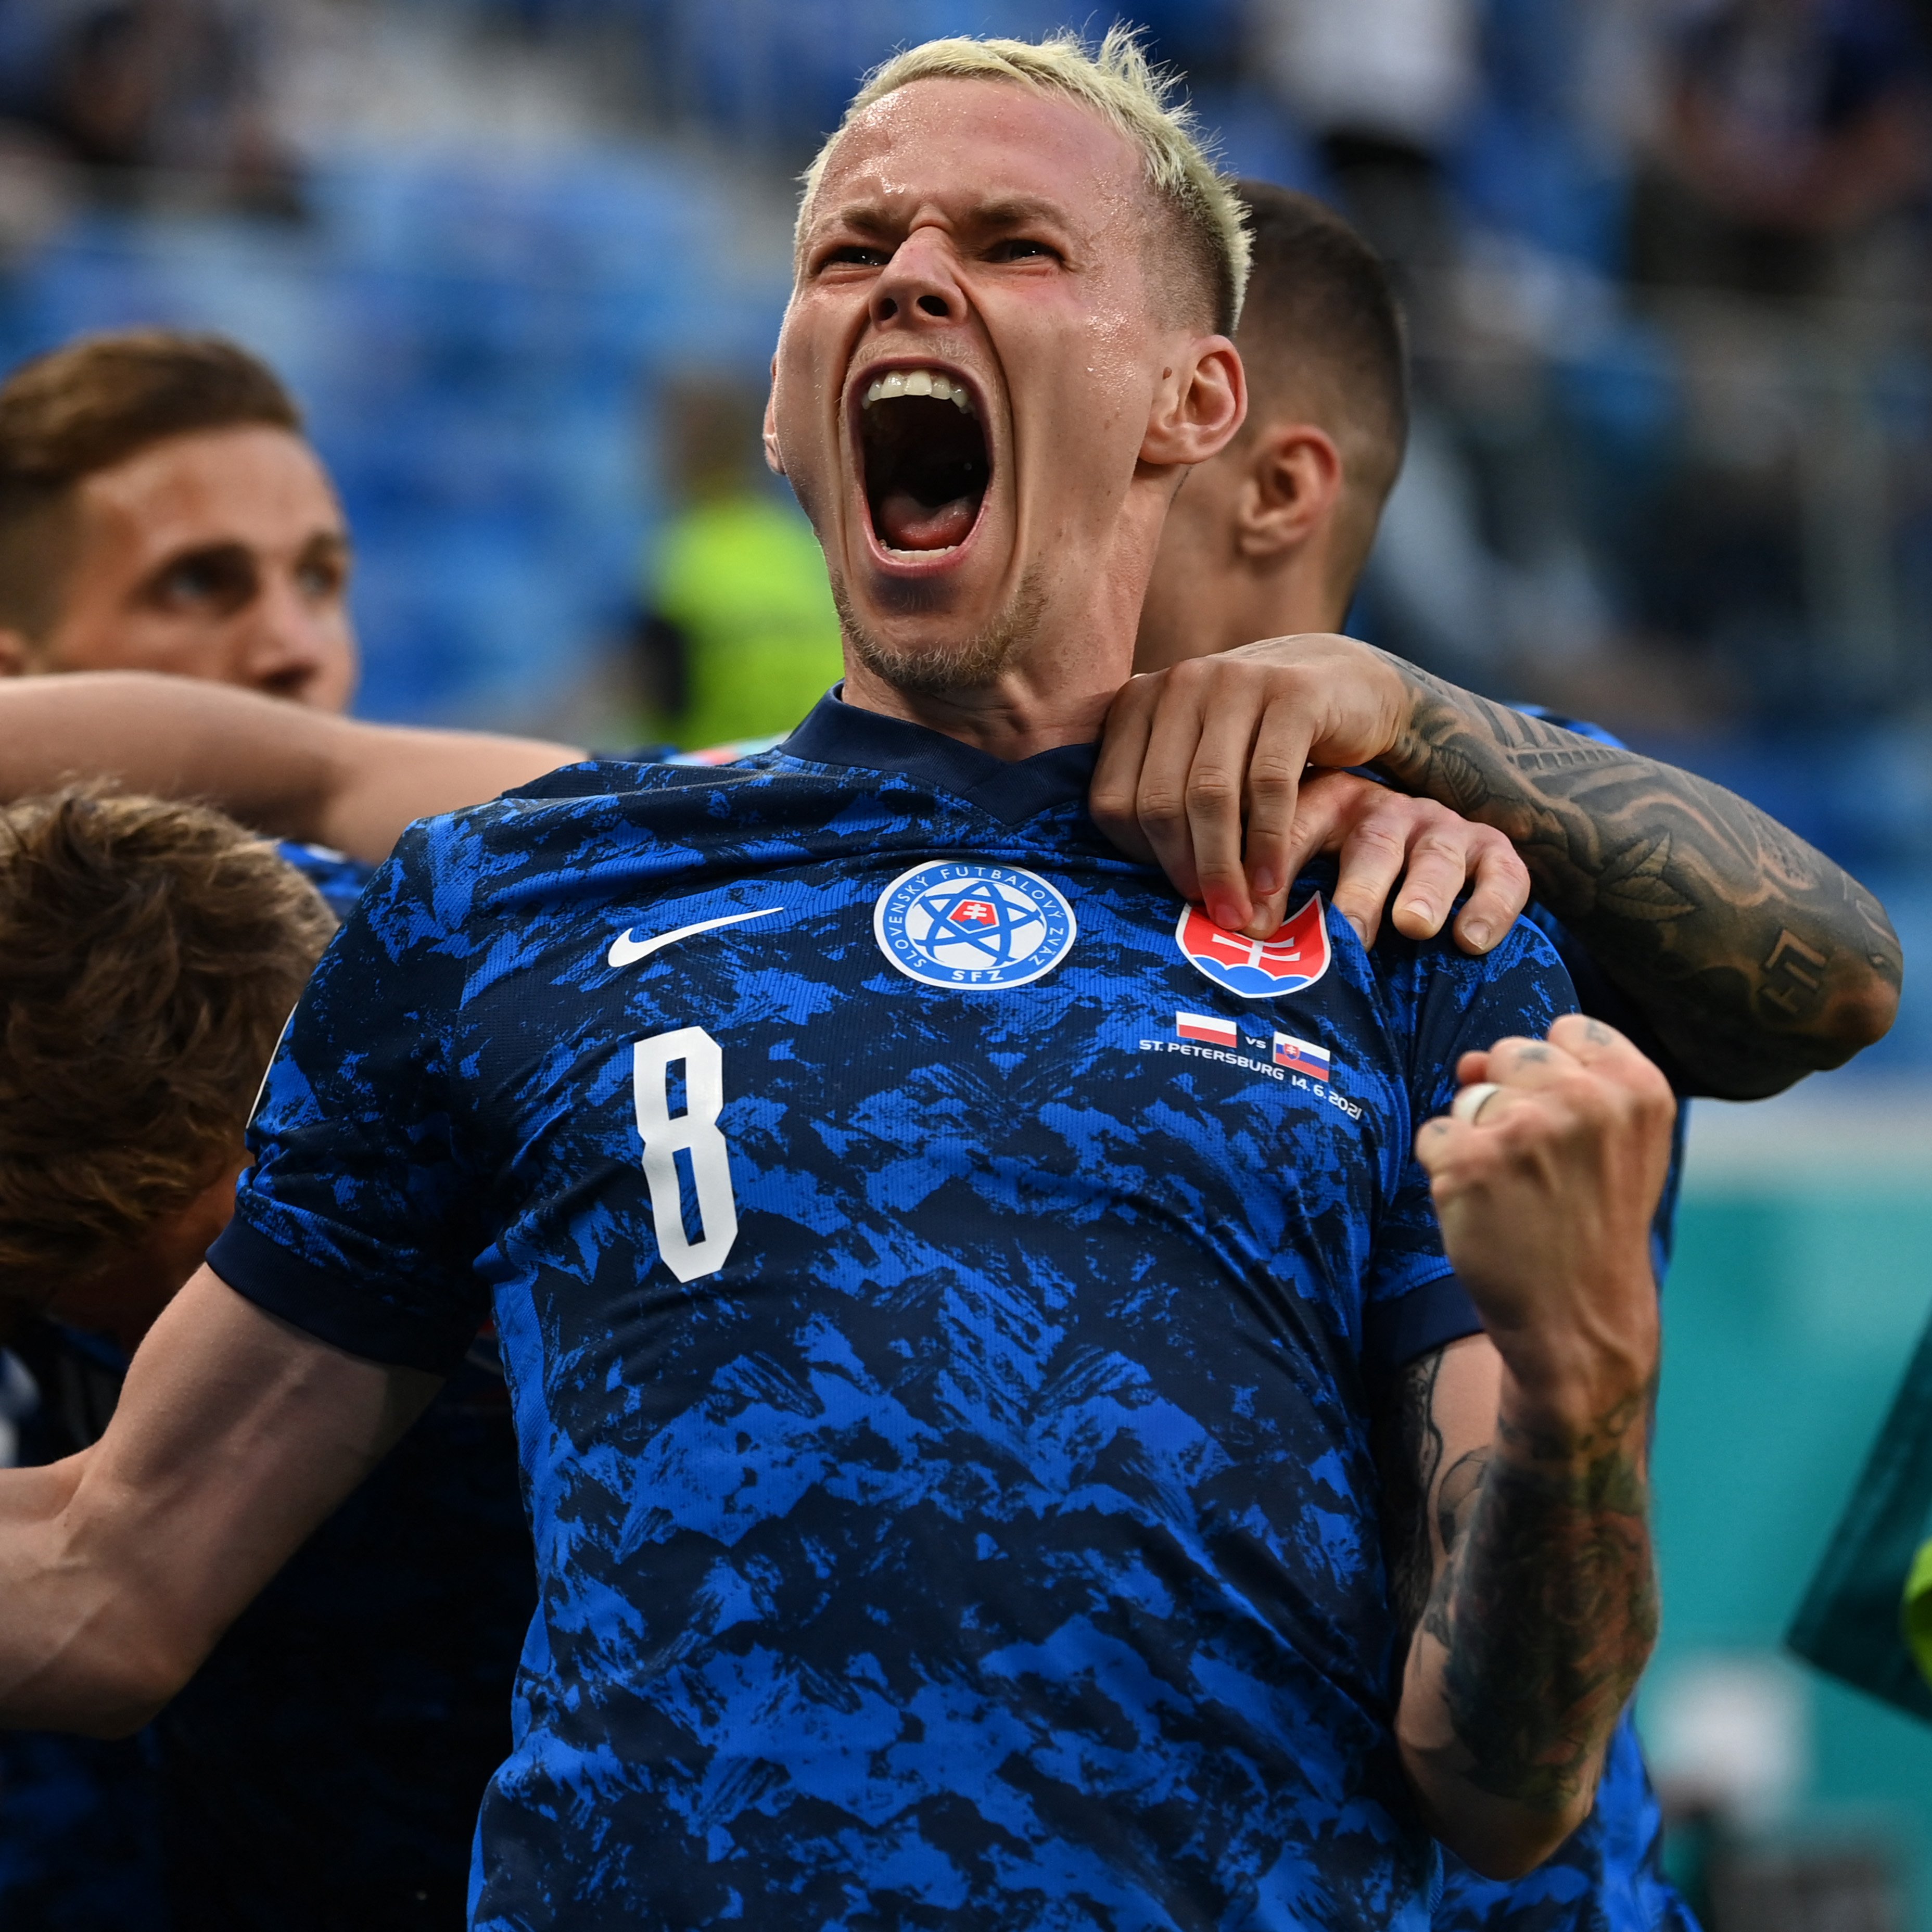 Slovakia upset Poland 2-1 in Euro 2020